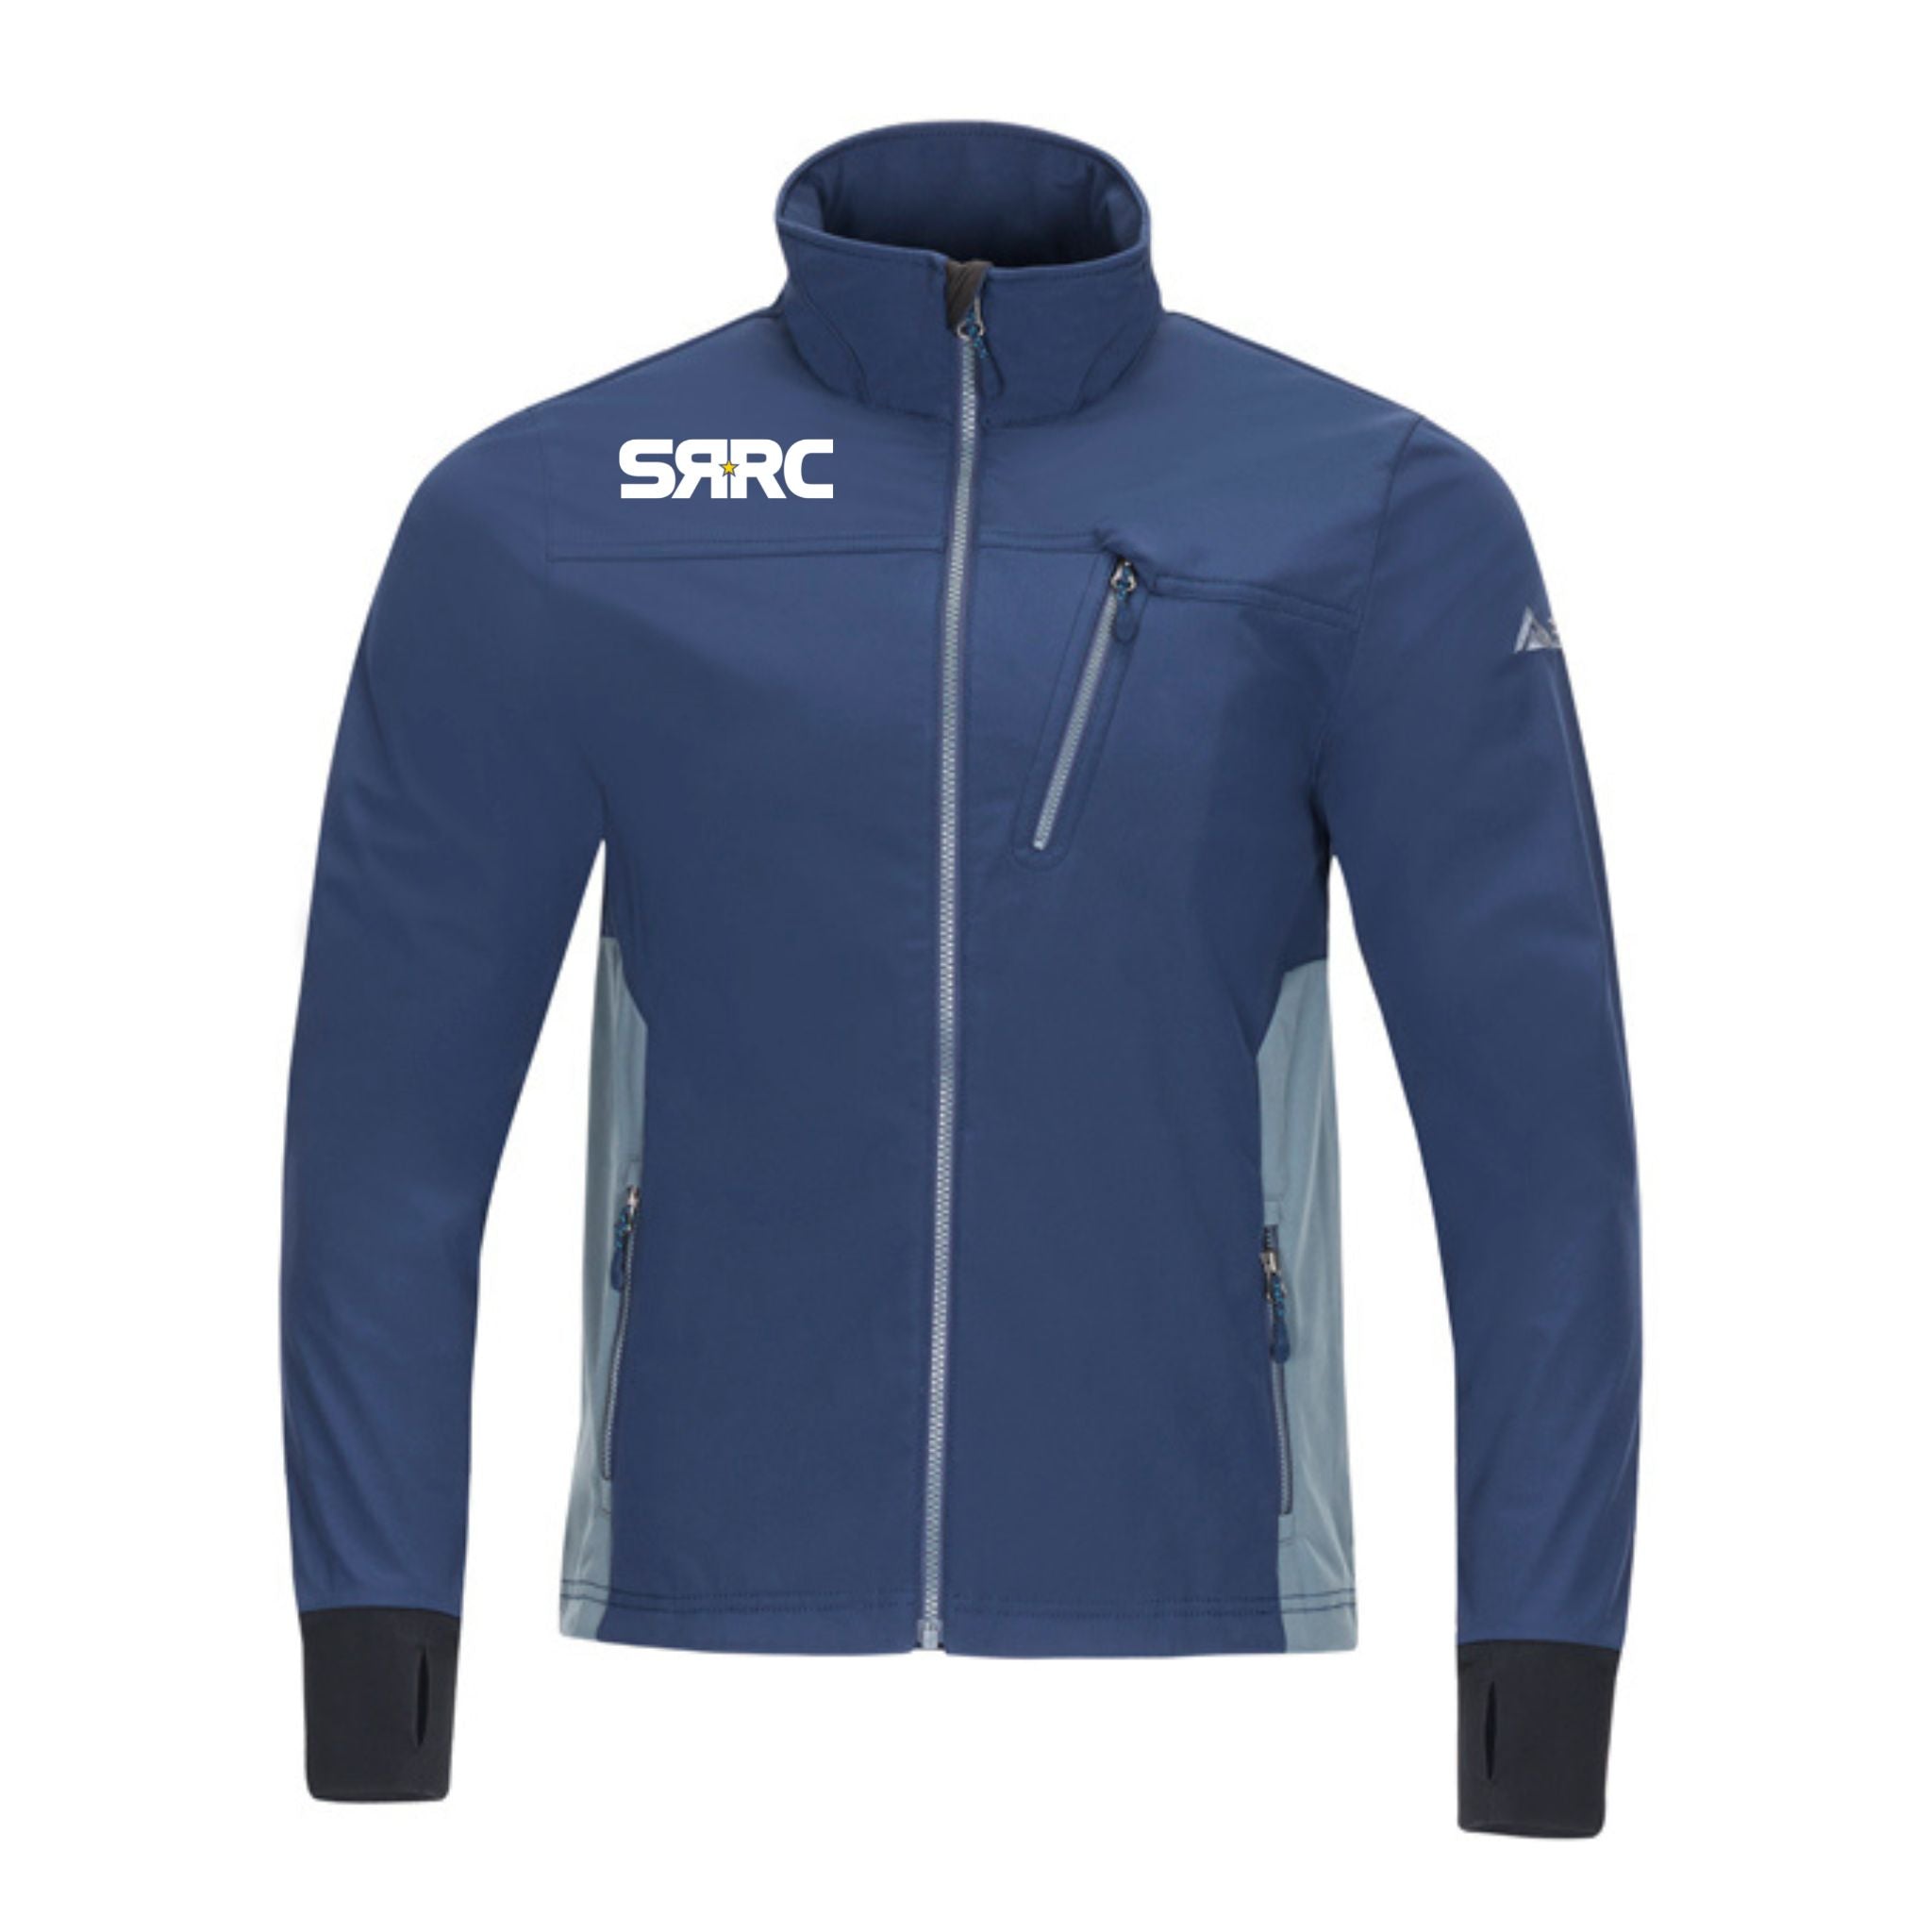 Speed Jacket - SRRC